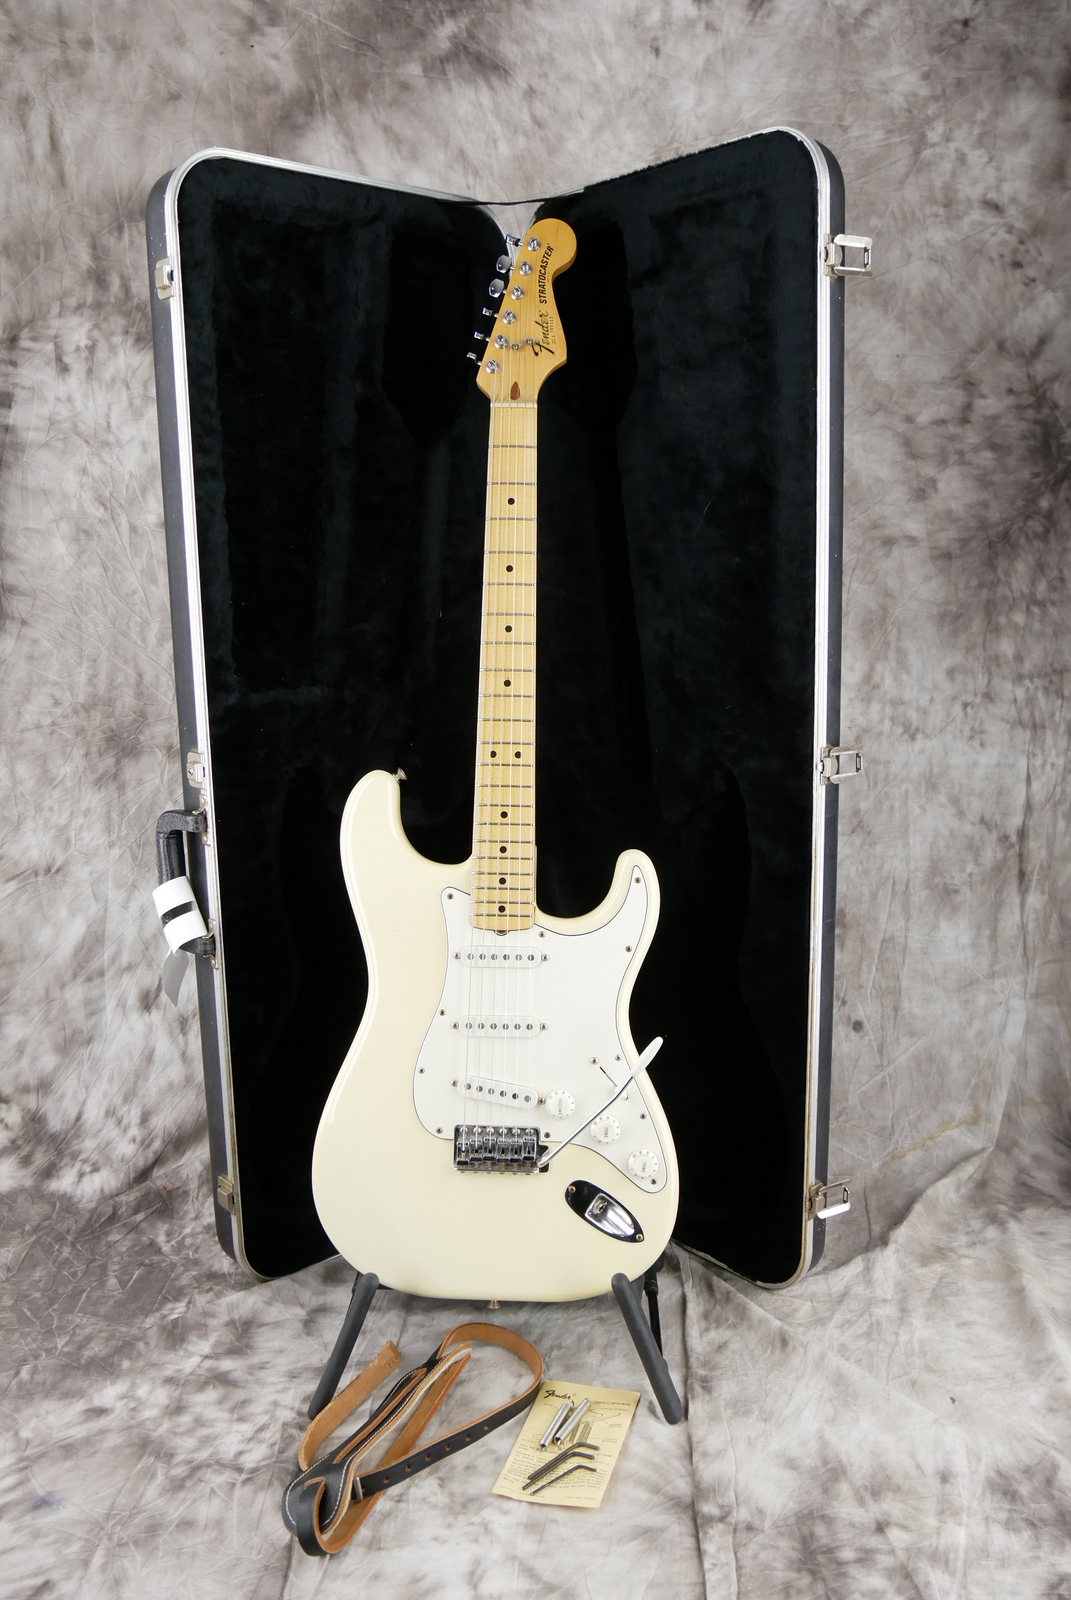 Fender_Stratocaster_Dan_smith_1982_tremolo_hardcase-013.JPG